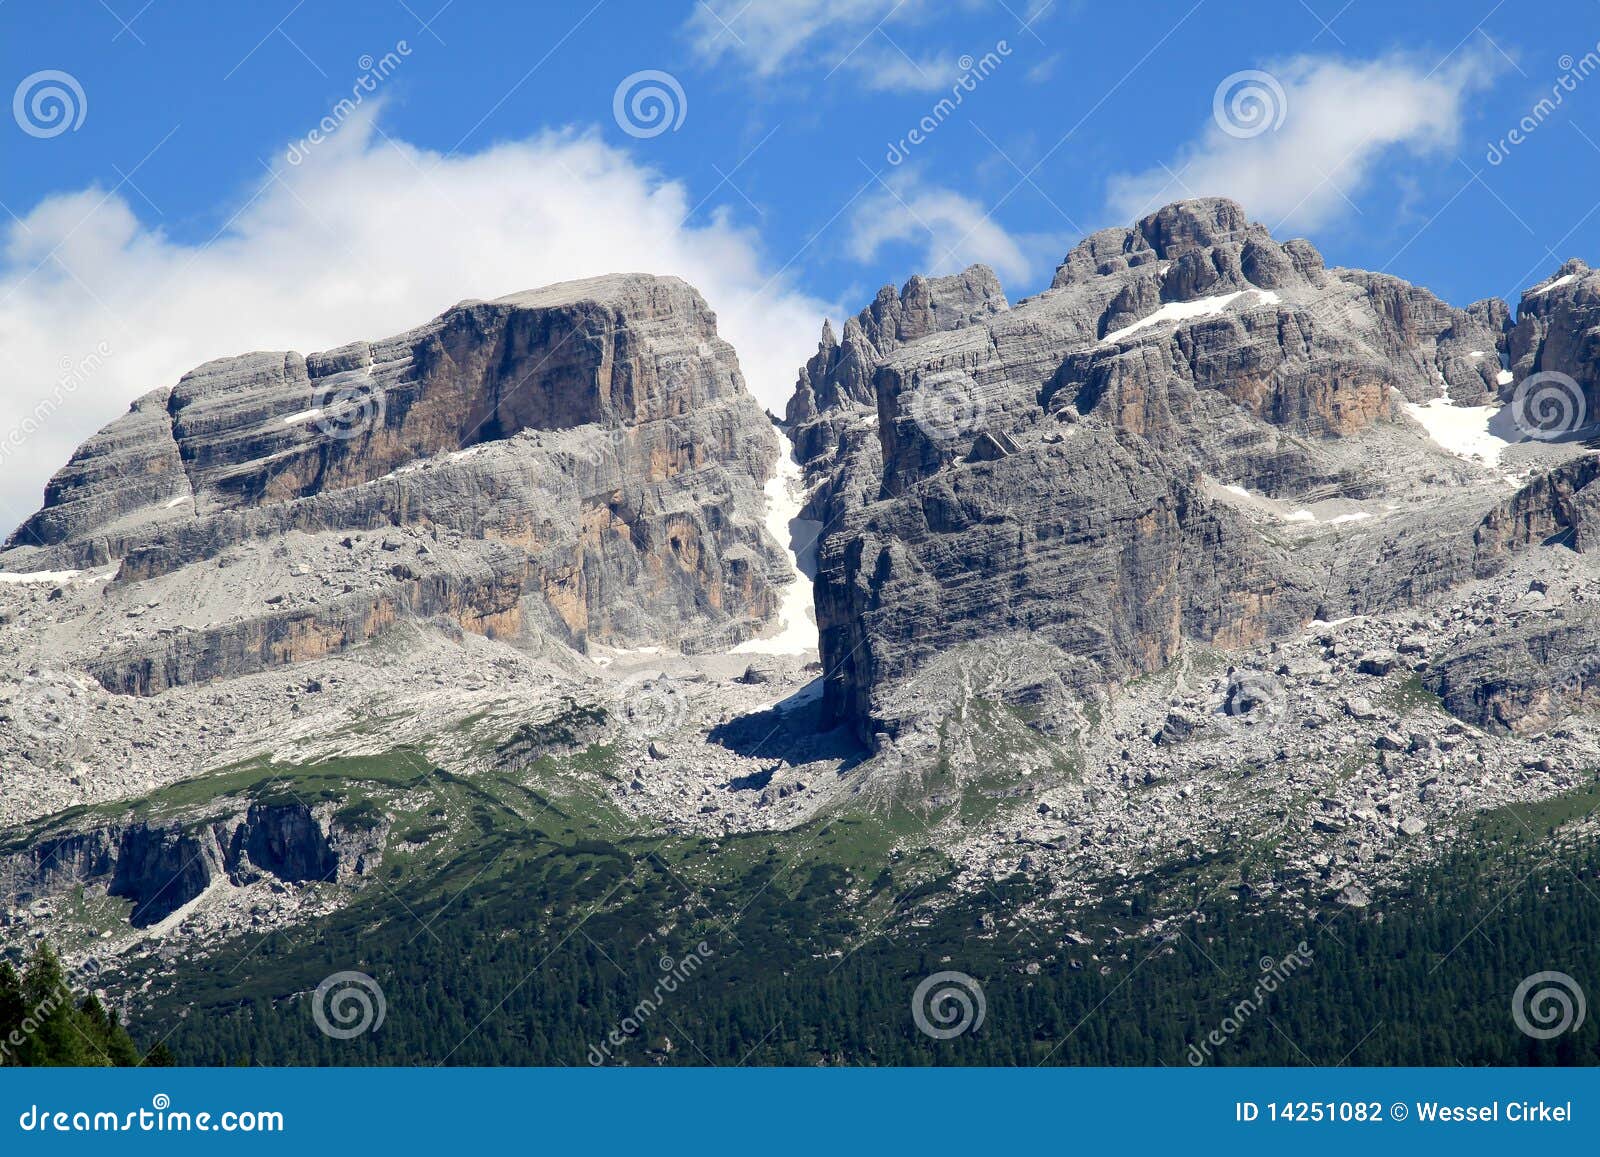 mountains of dolomiti di brenta, italy